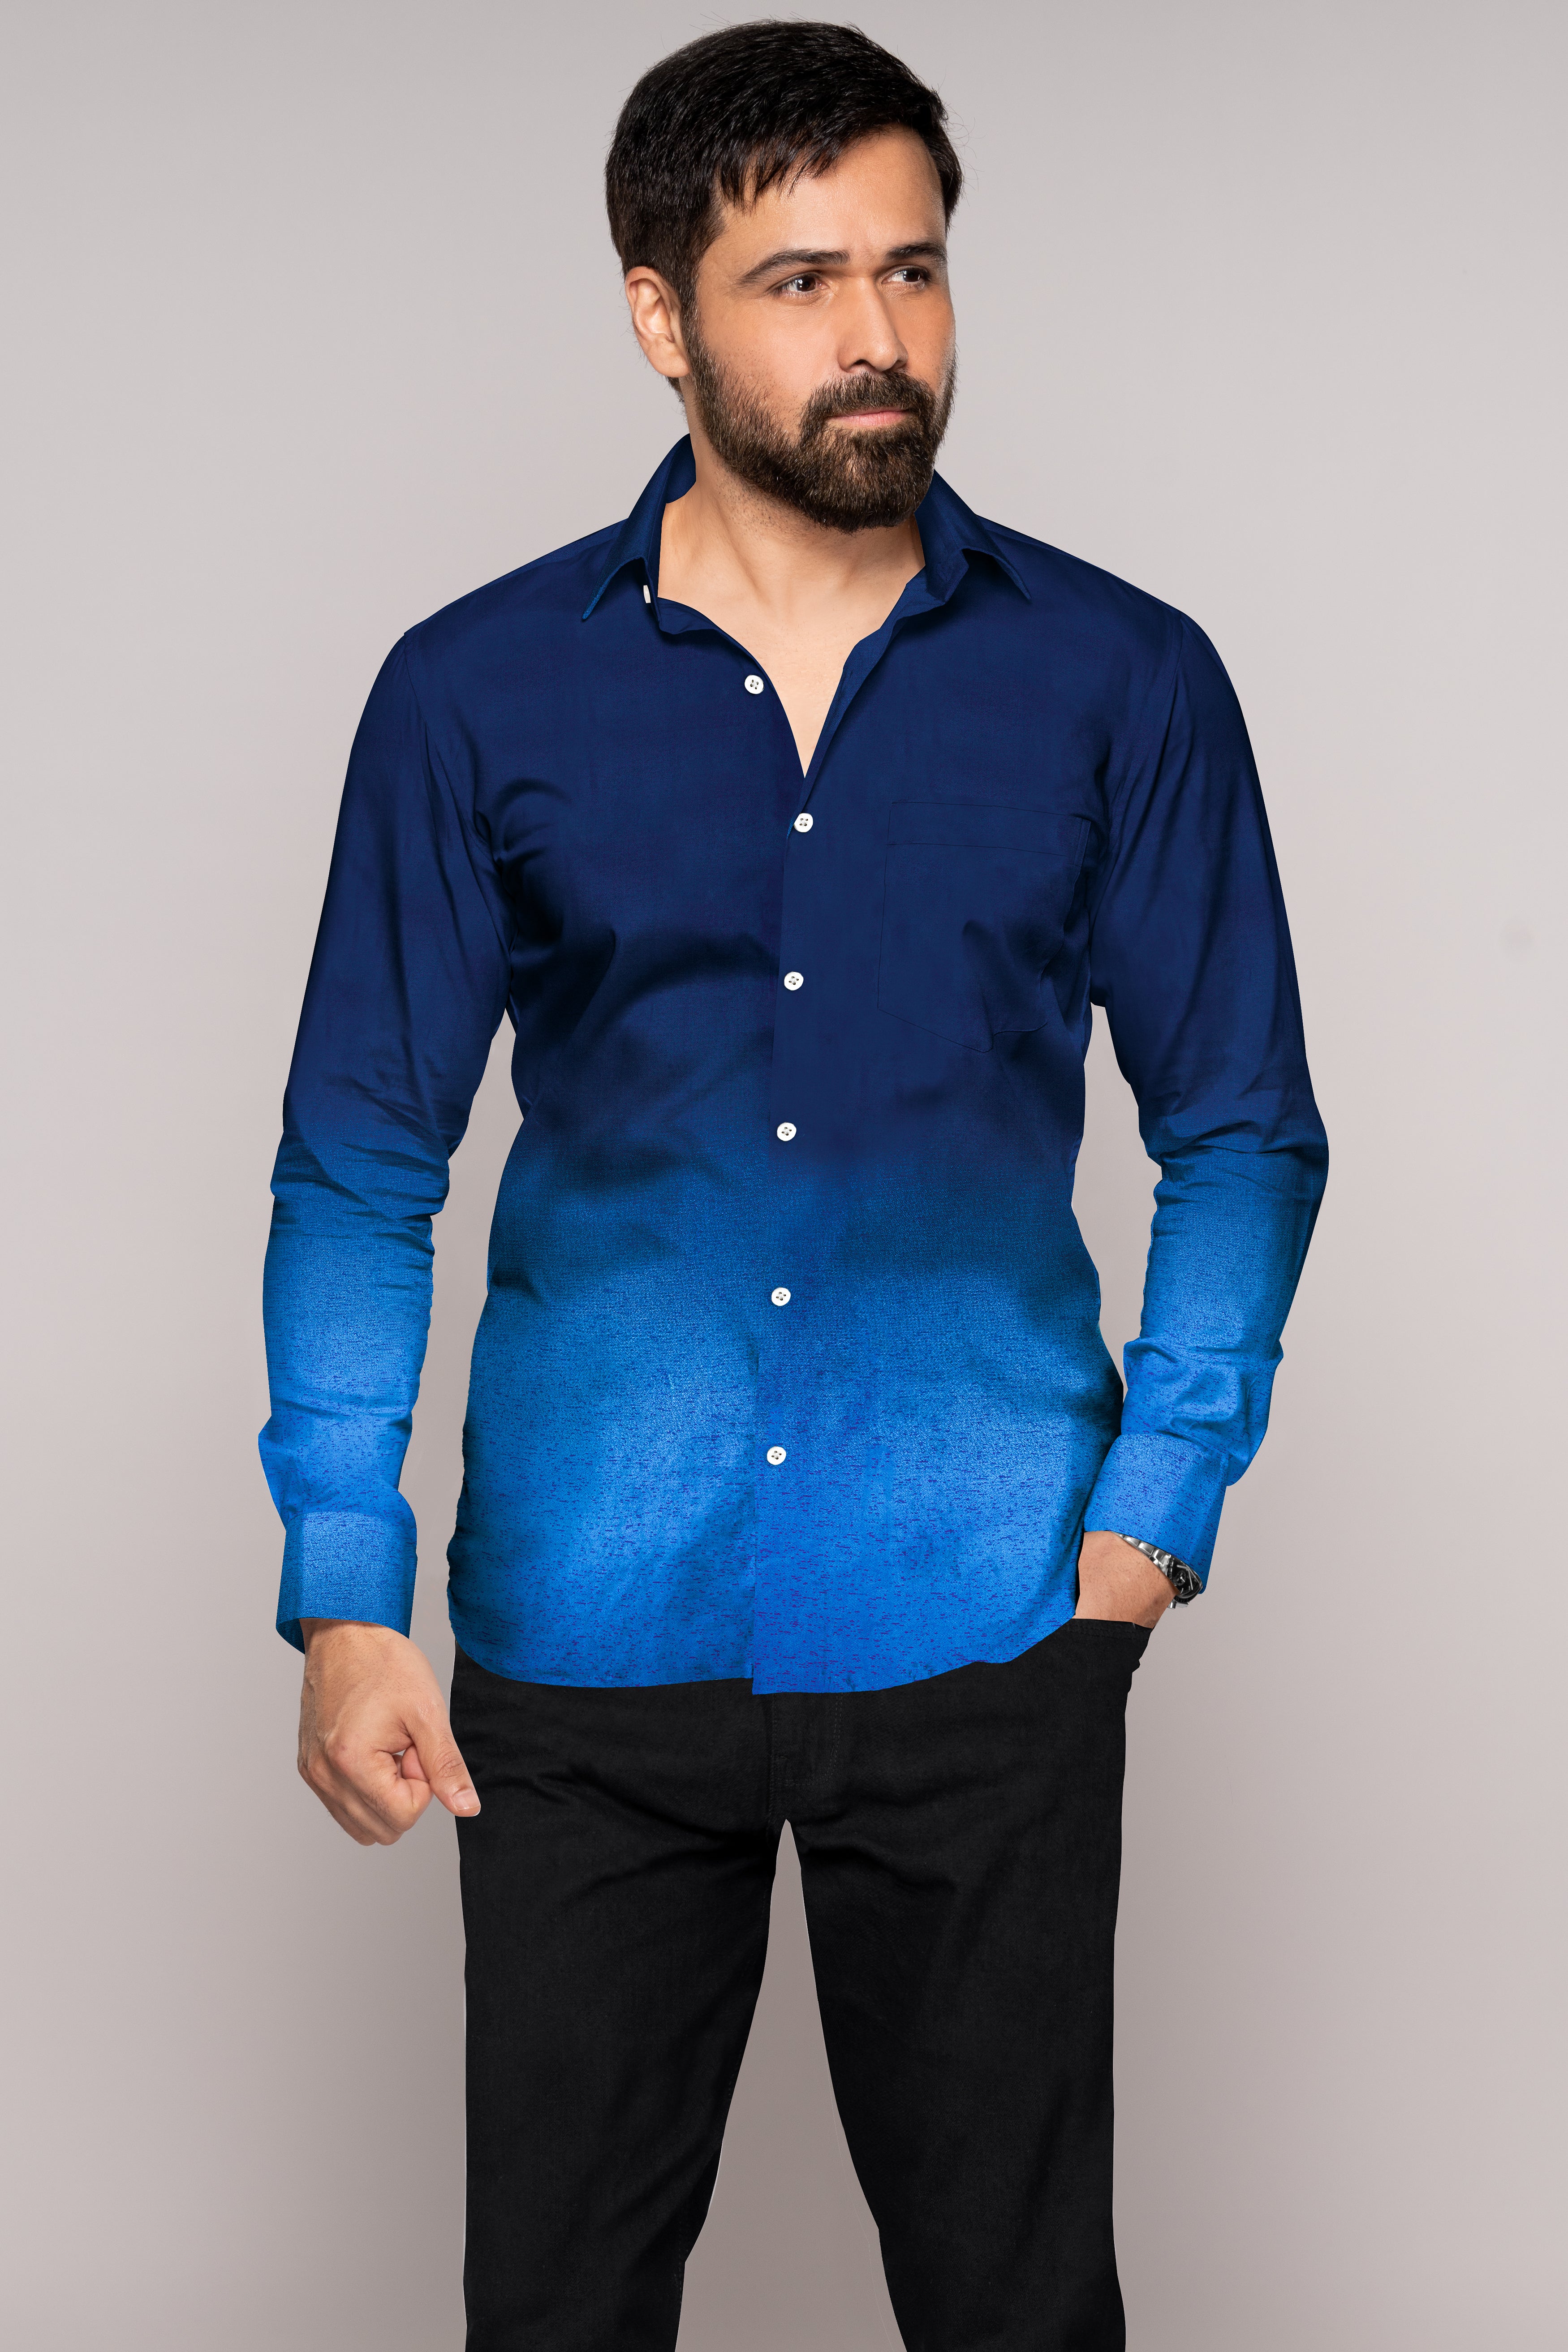 Downriver Navy Blue and Azure Blue Super Soft Premium Cotton Shirt